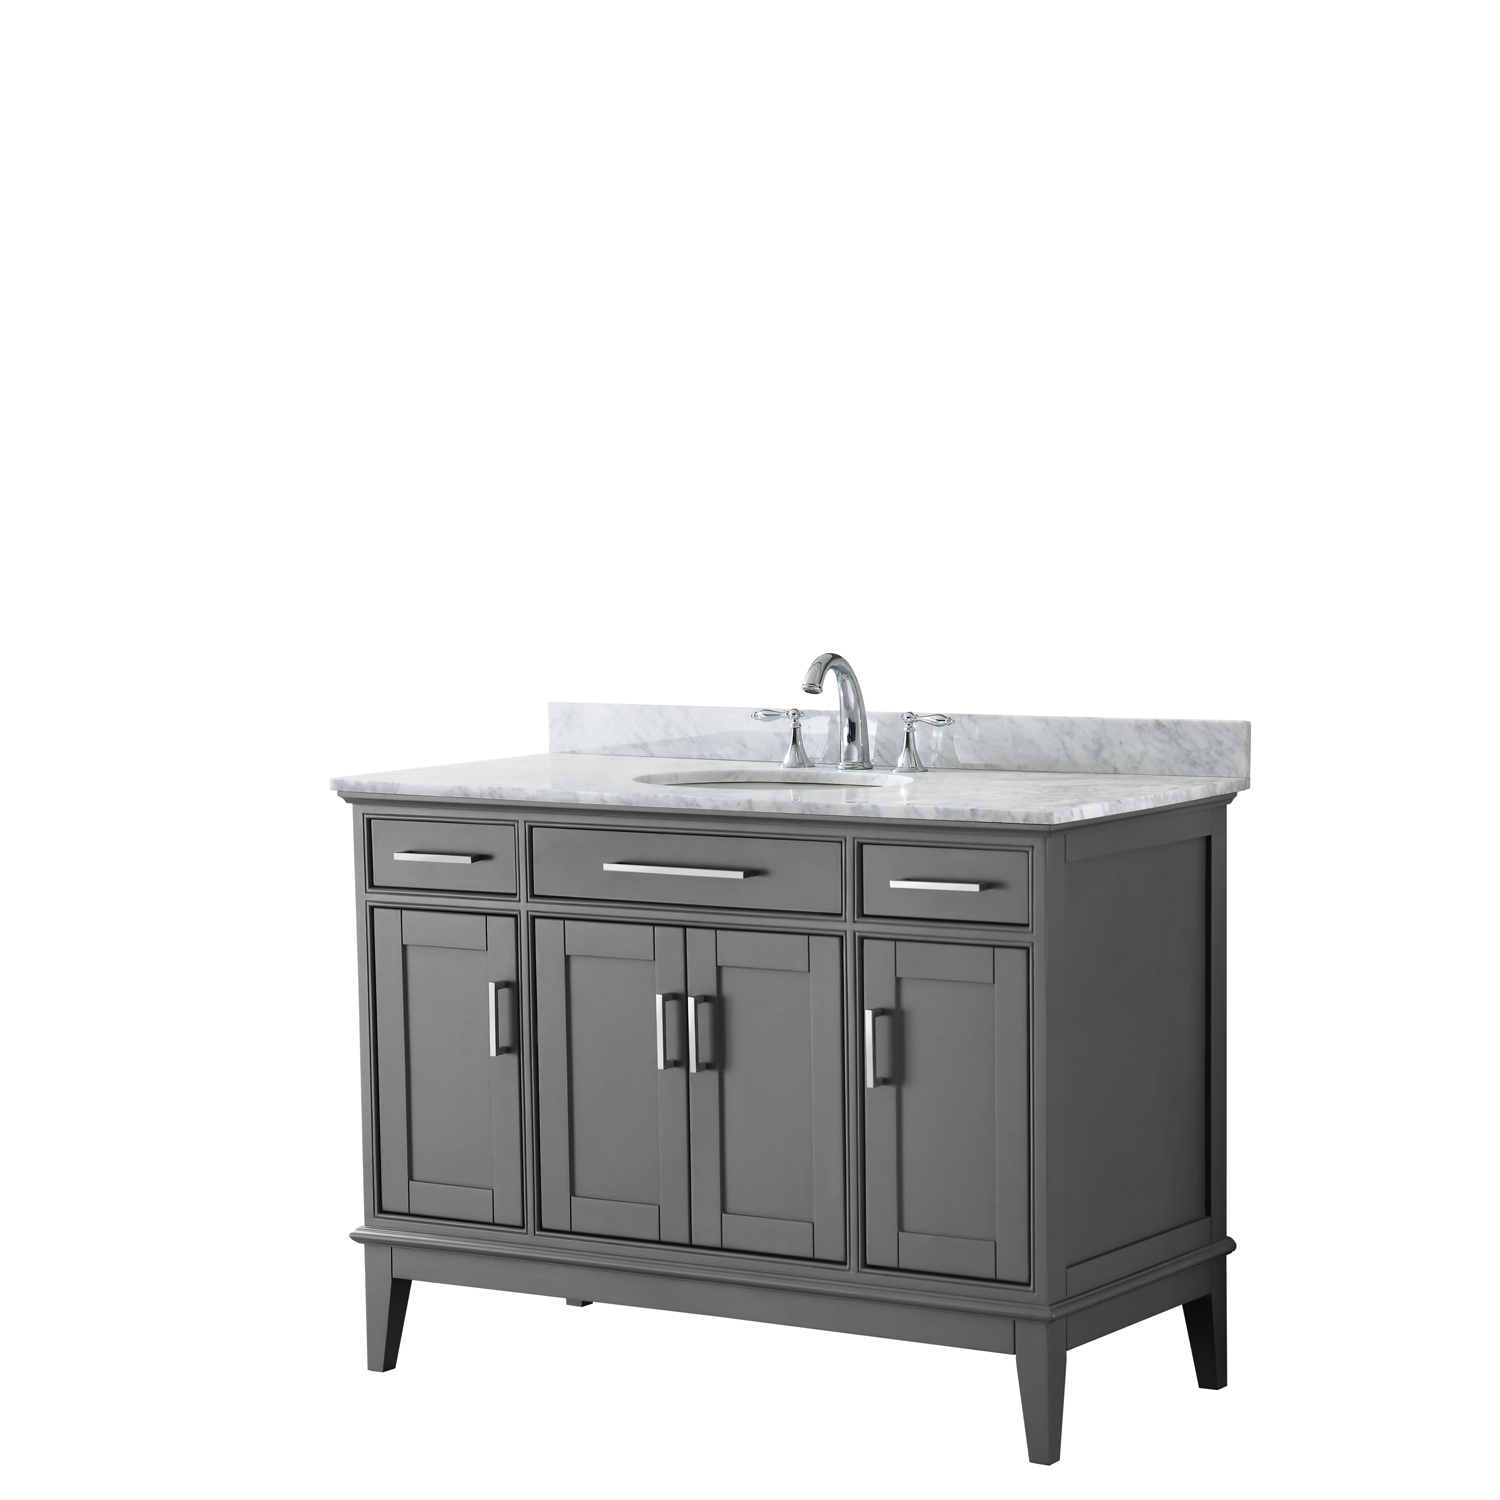 Contemporary 48" Single Bathroom Vanity in Dark Gray, White Carrara Marble Countertop with Undermount Sink, and Mirror Options